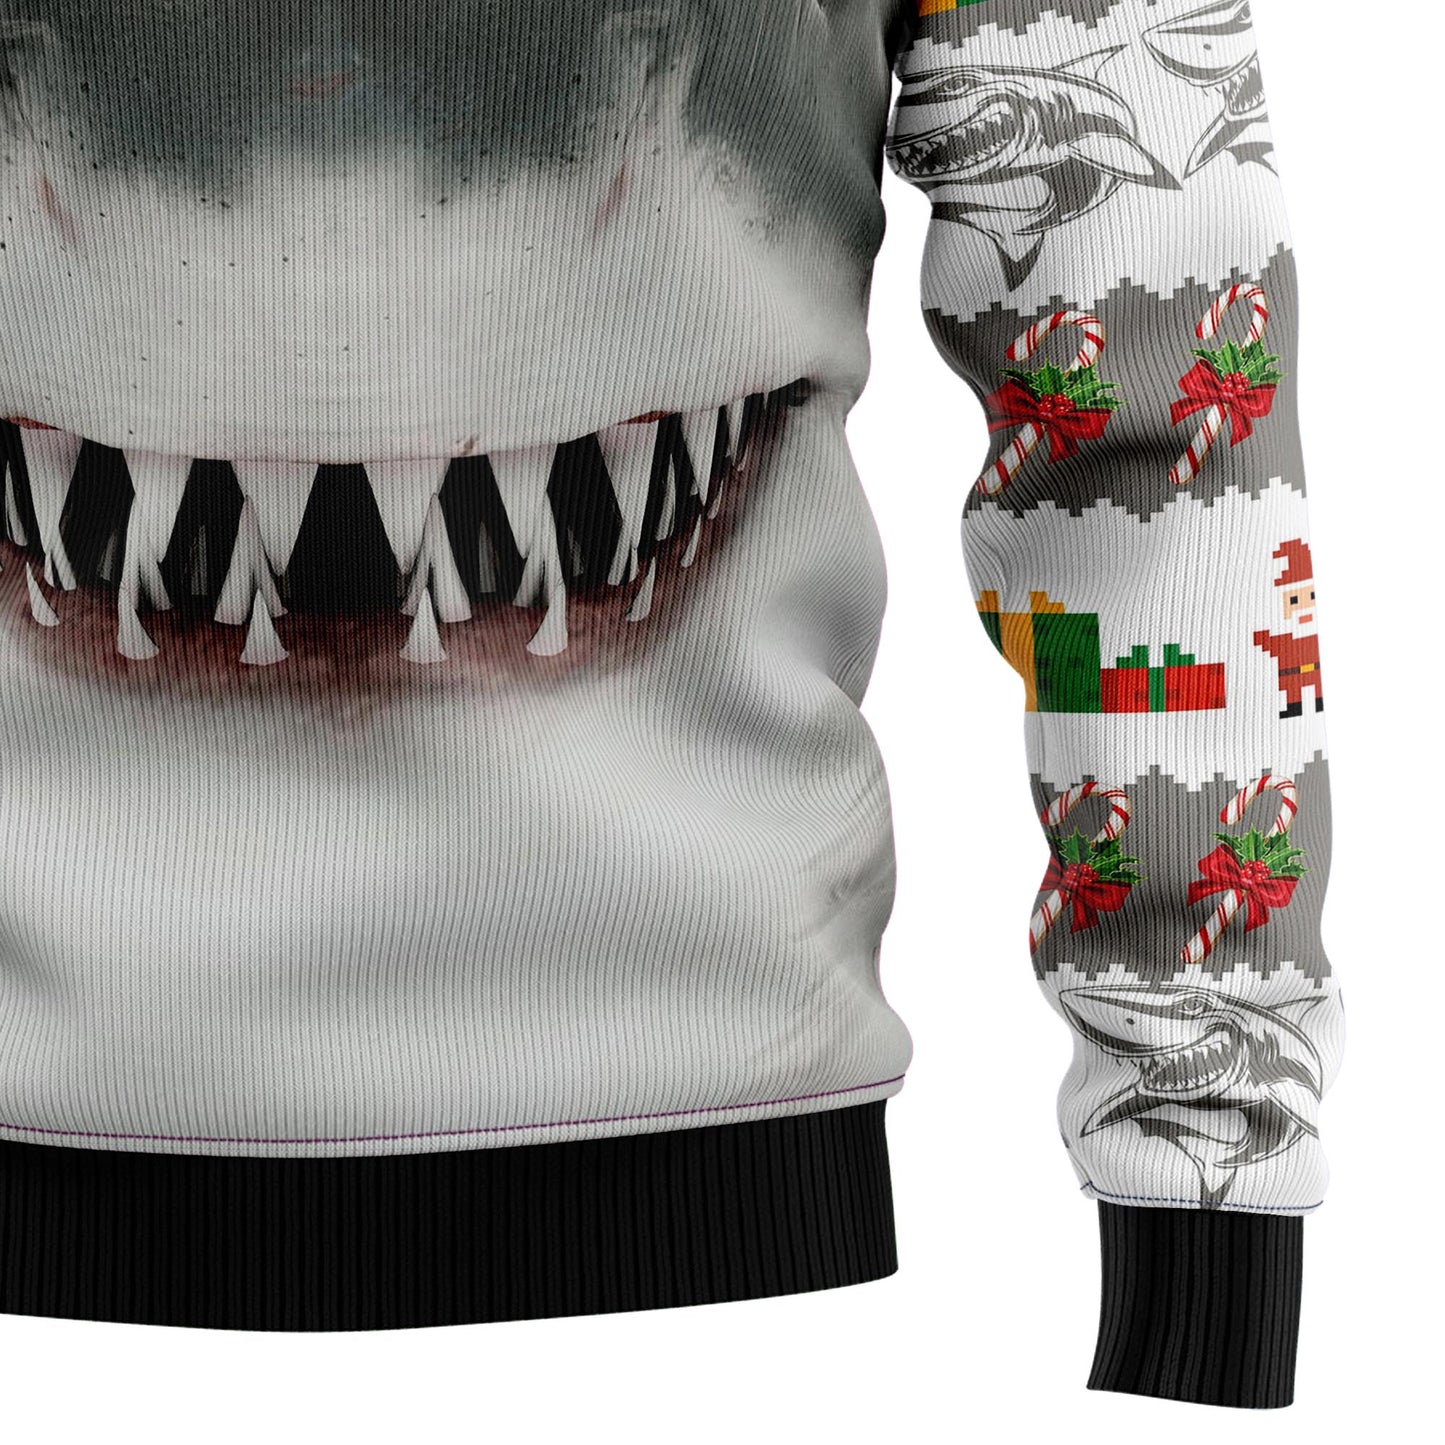 Shark Cute Face T2210 Ugly Christmas Sweater